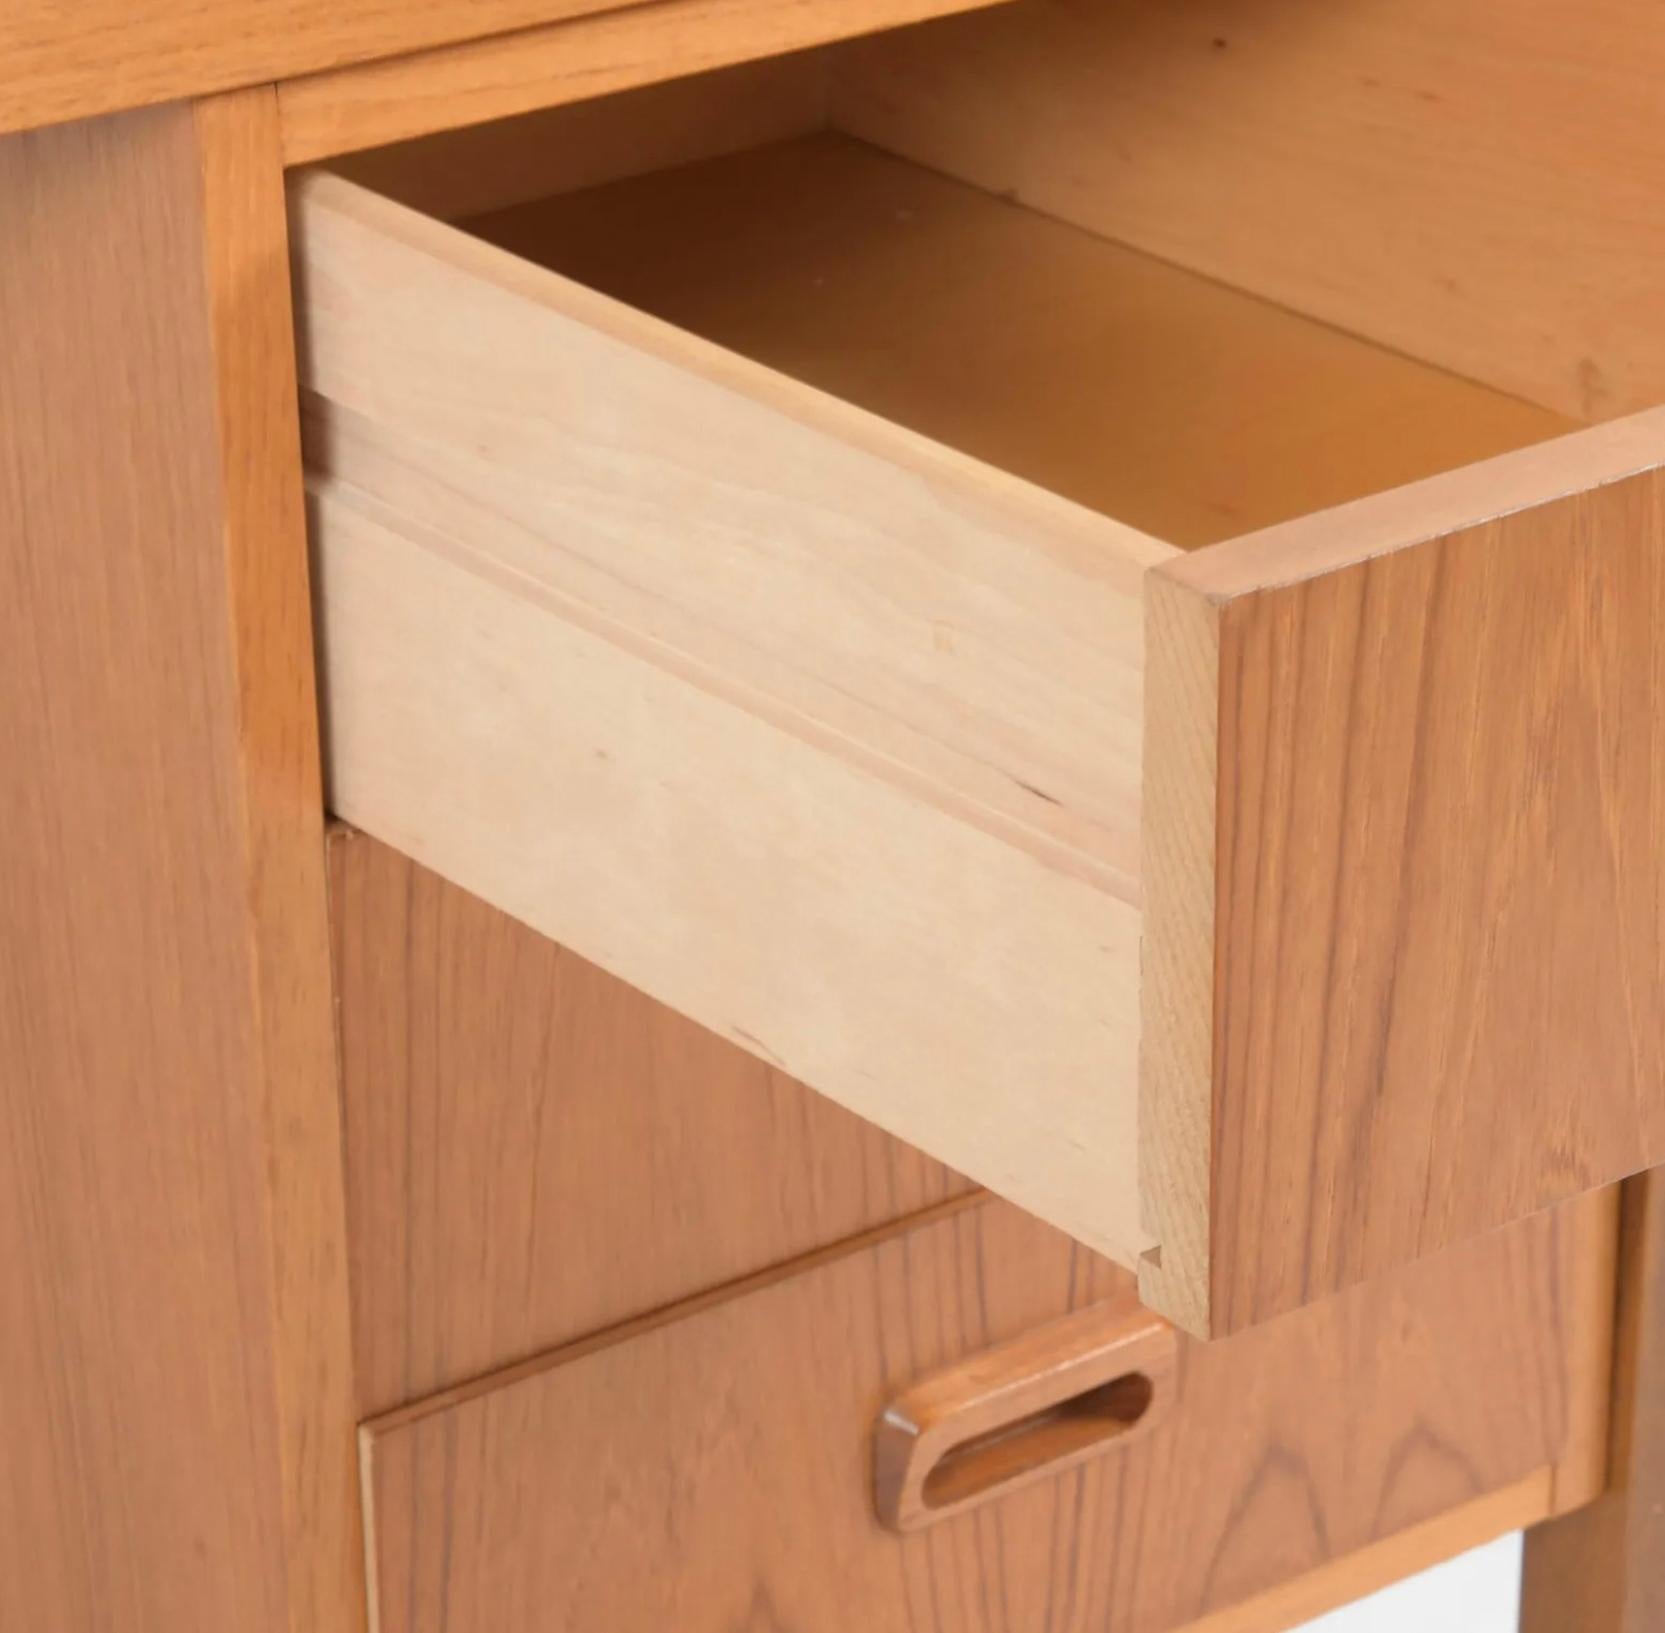 teak desk with drawers